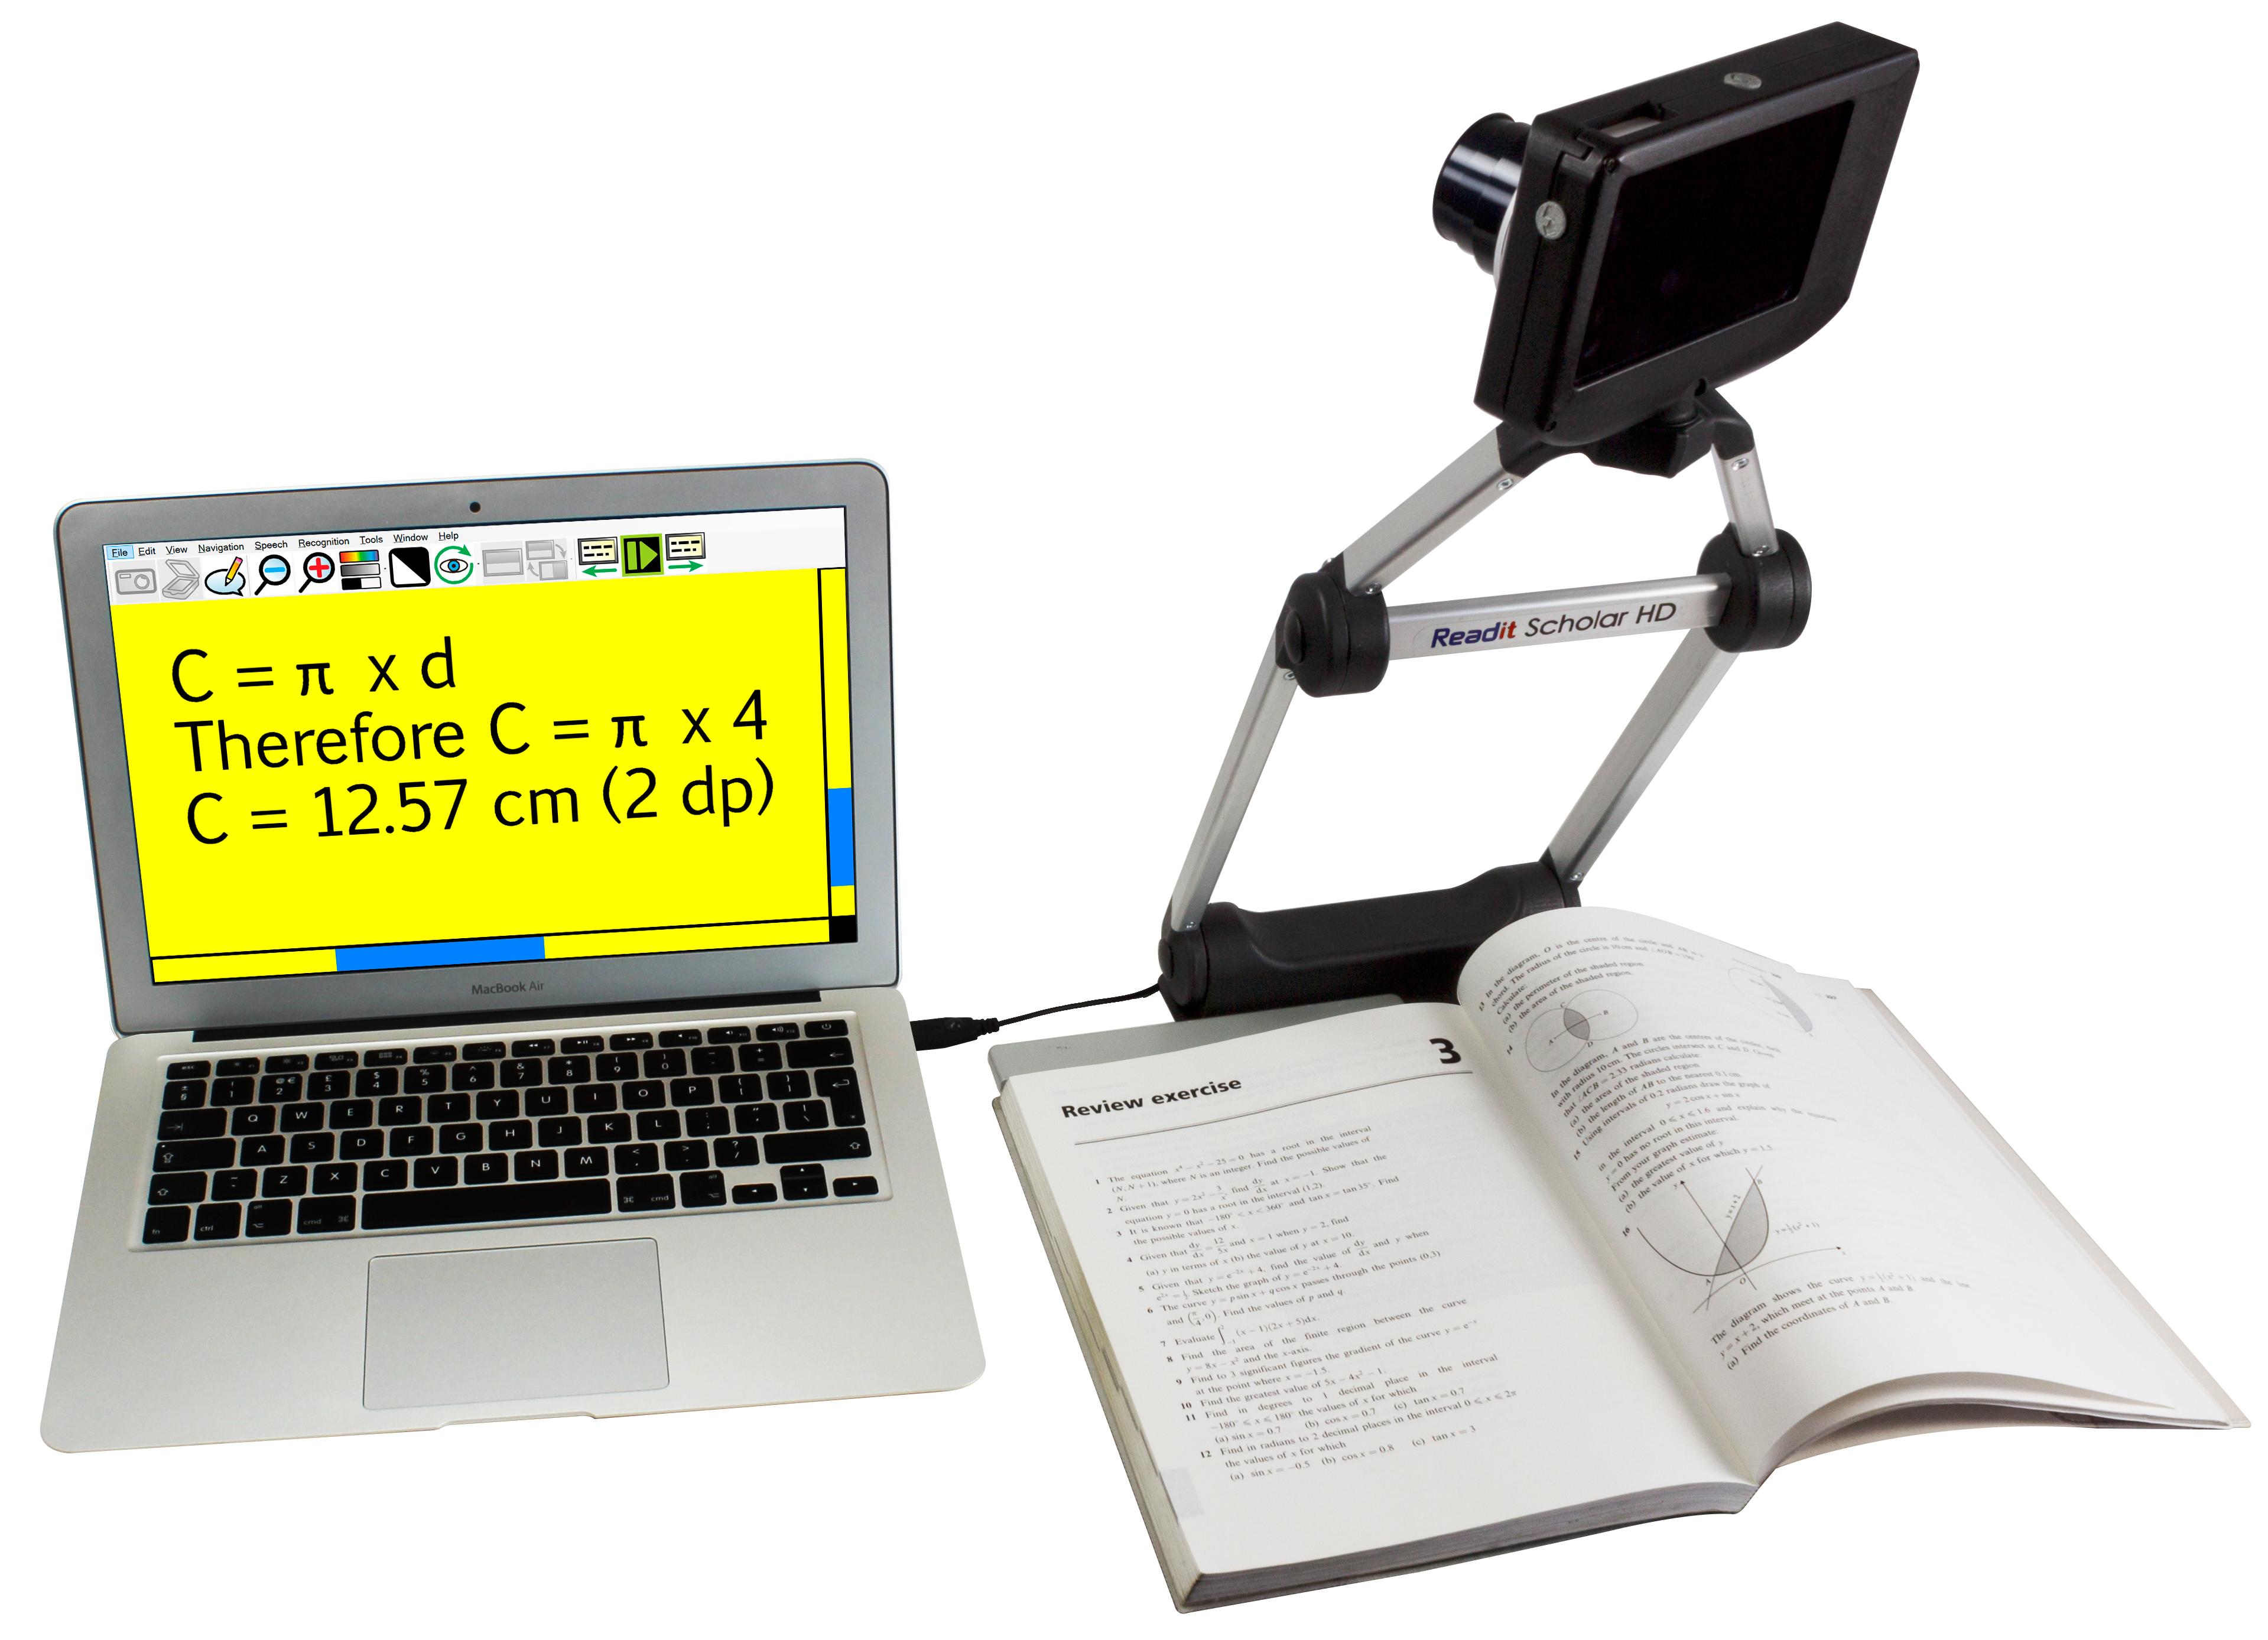 Readit Scholar camera facing a whiteboard